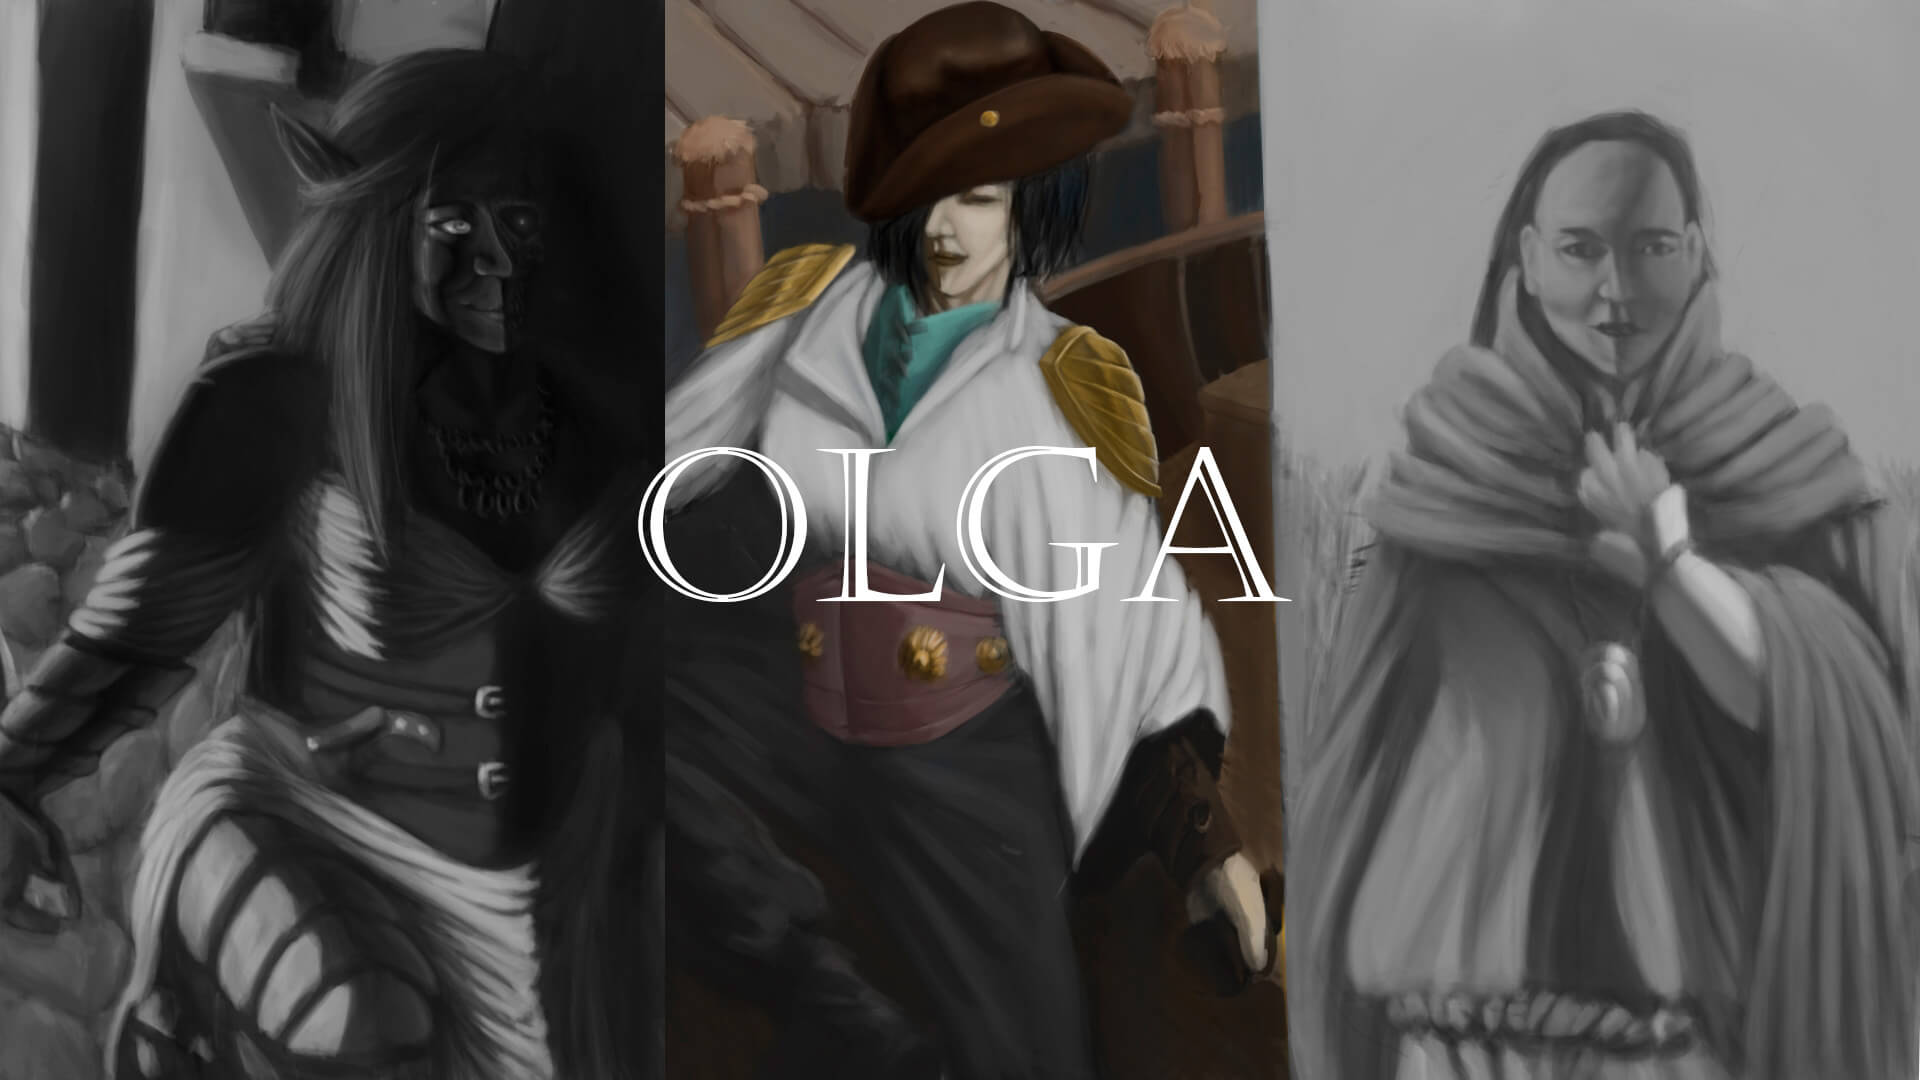 Olga a Pirata Capa